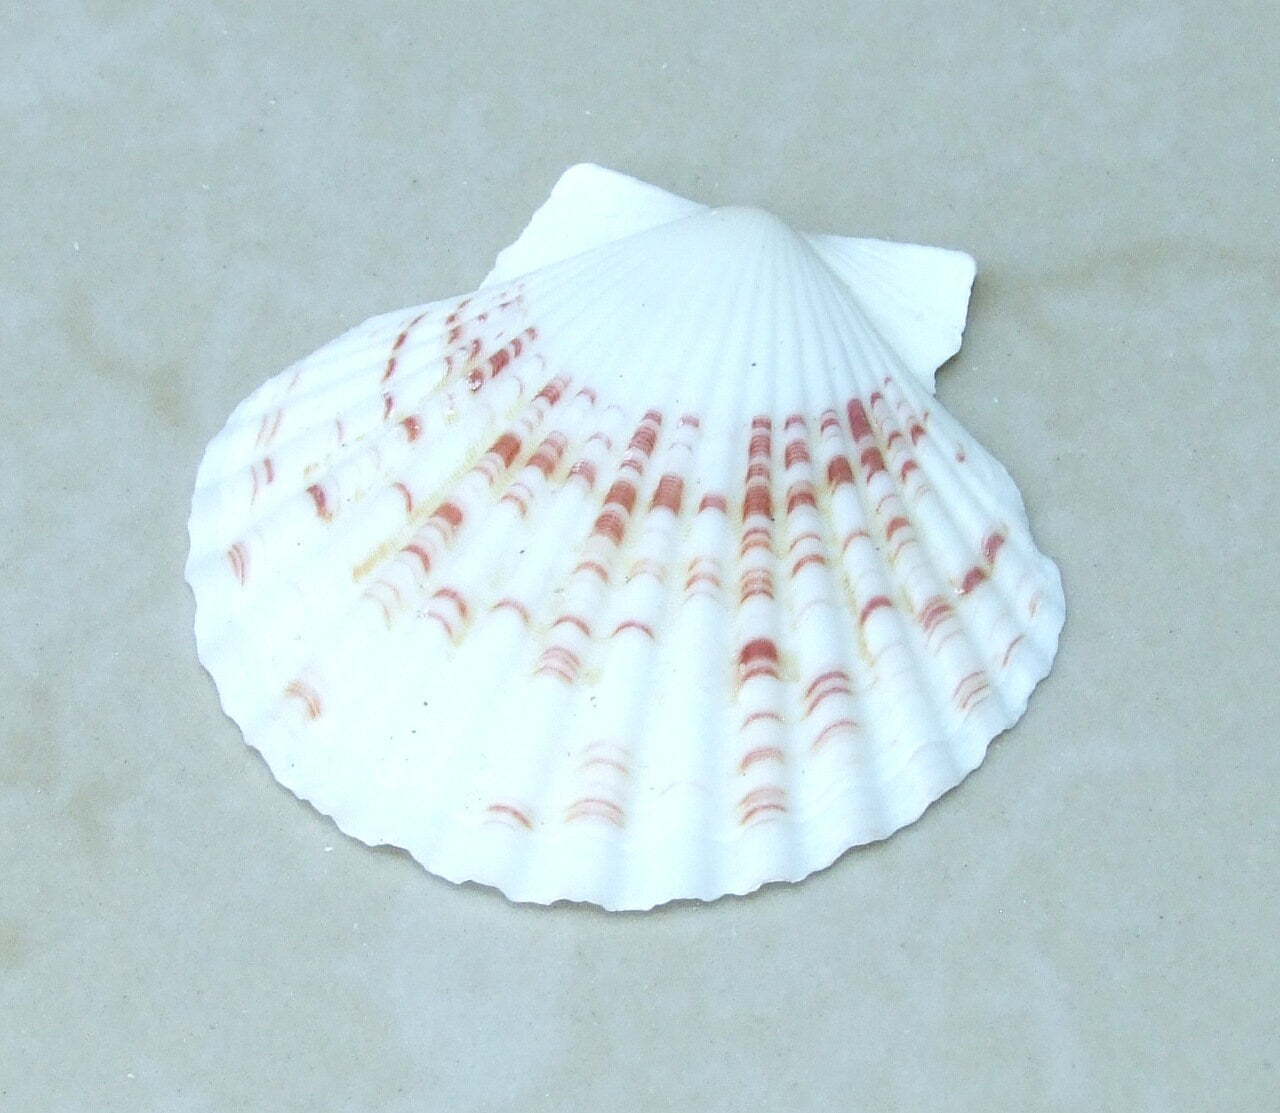 10 Natural Scallop Shell, Undrilled Seashells, Natural Seashells, Craft Shells, Pecten Shells, Beach Decor, 40mm - 55mm, 10 Shells, 8-53